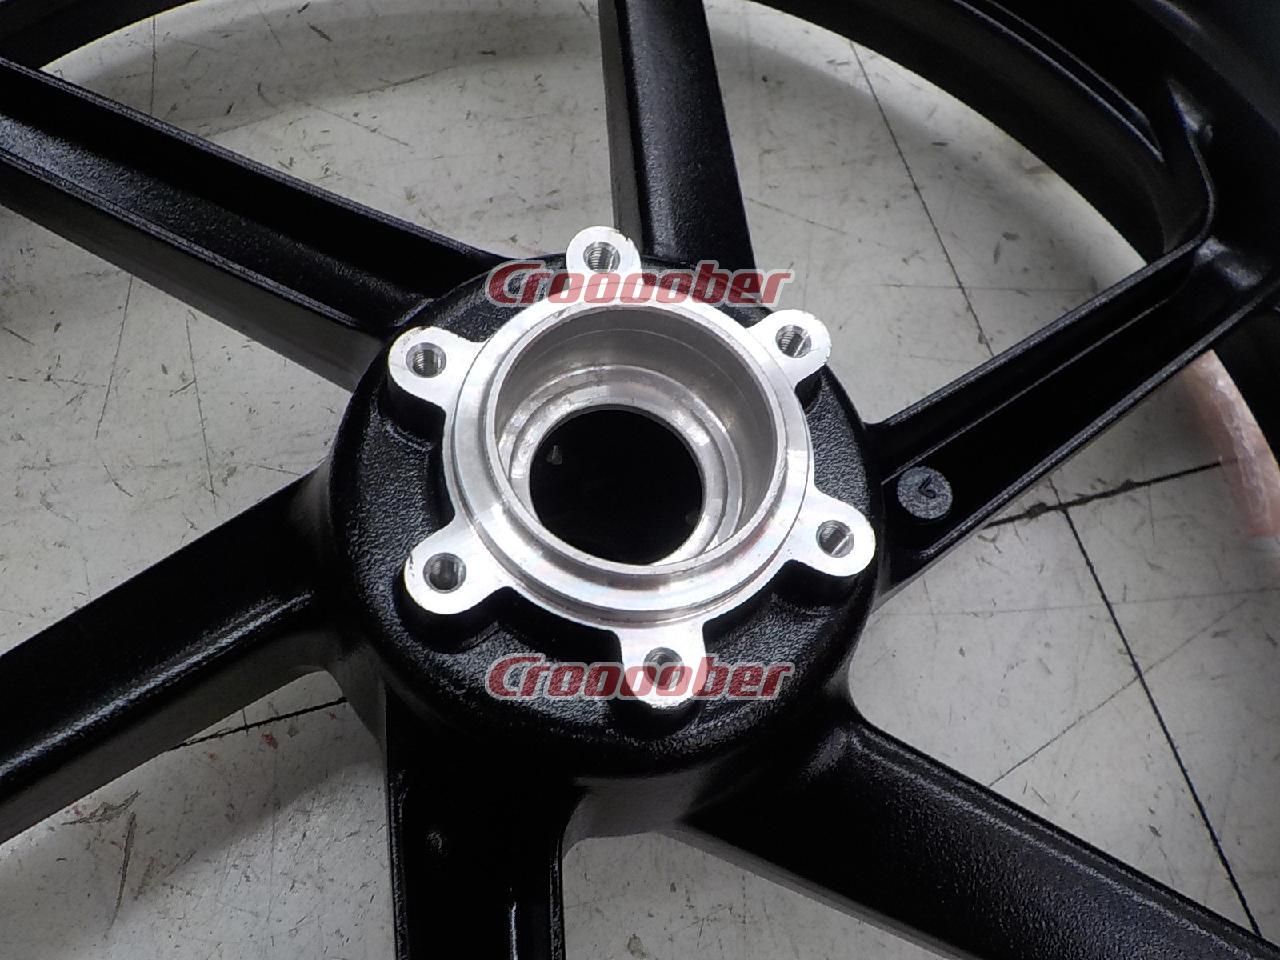 Honda Genuine Front Wheel [VFR800] - Rims for Sale | Croooober